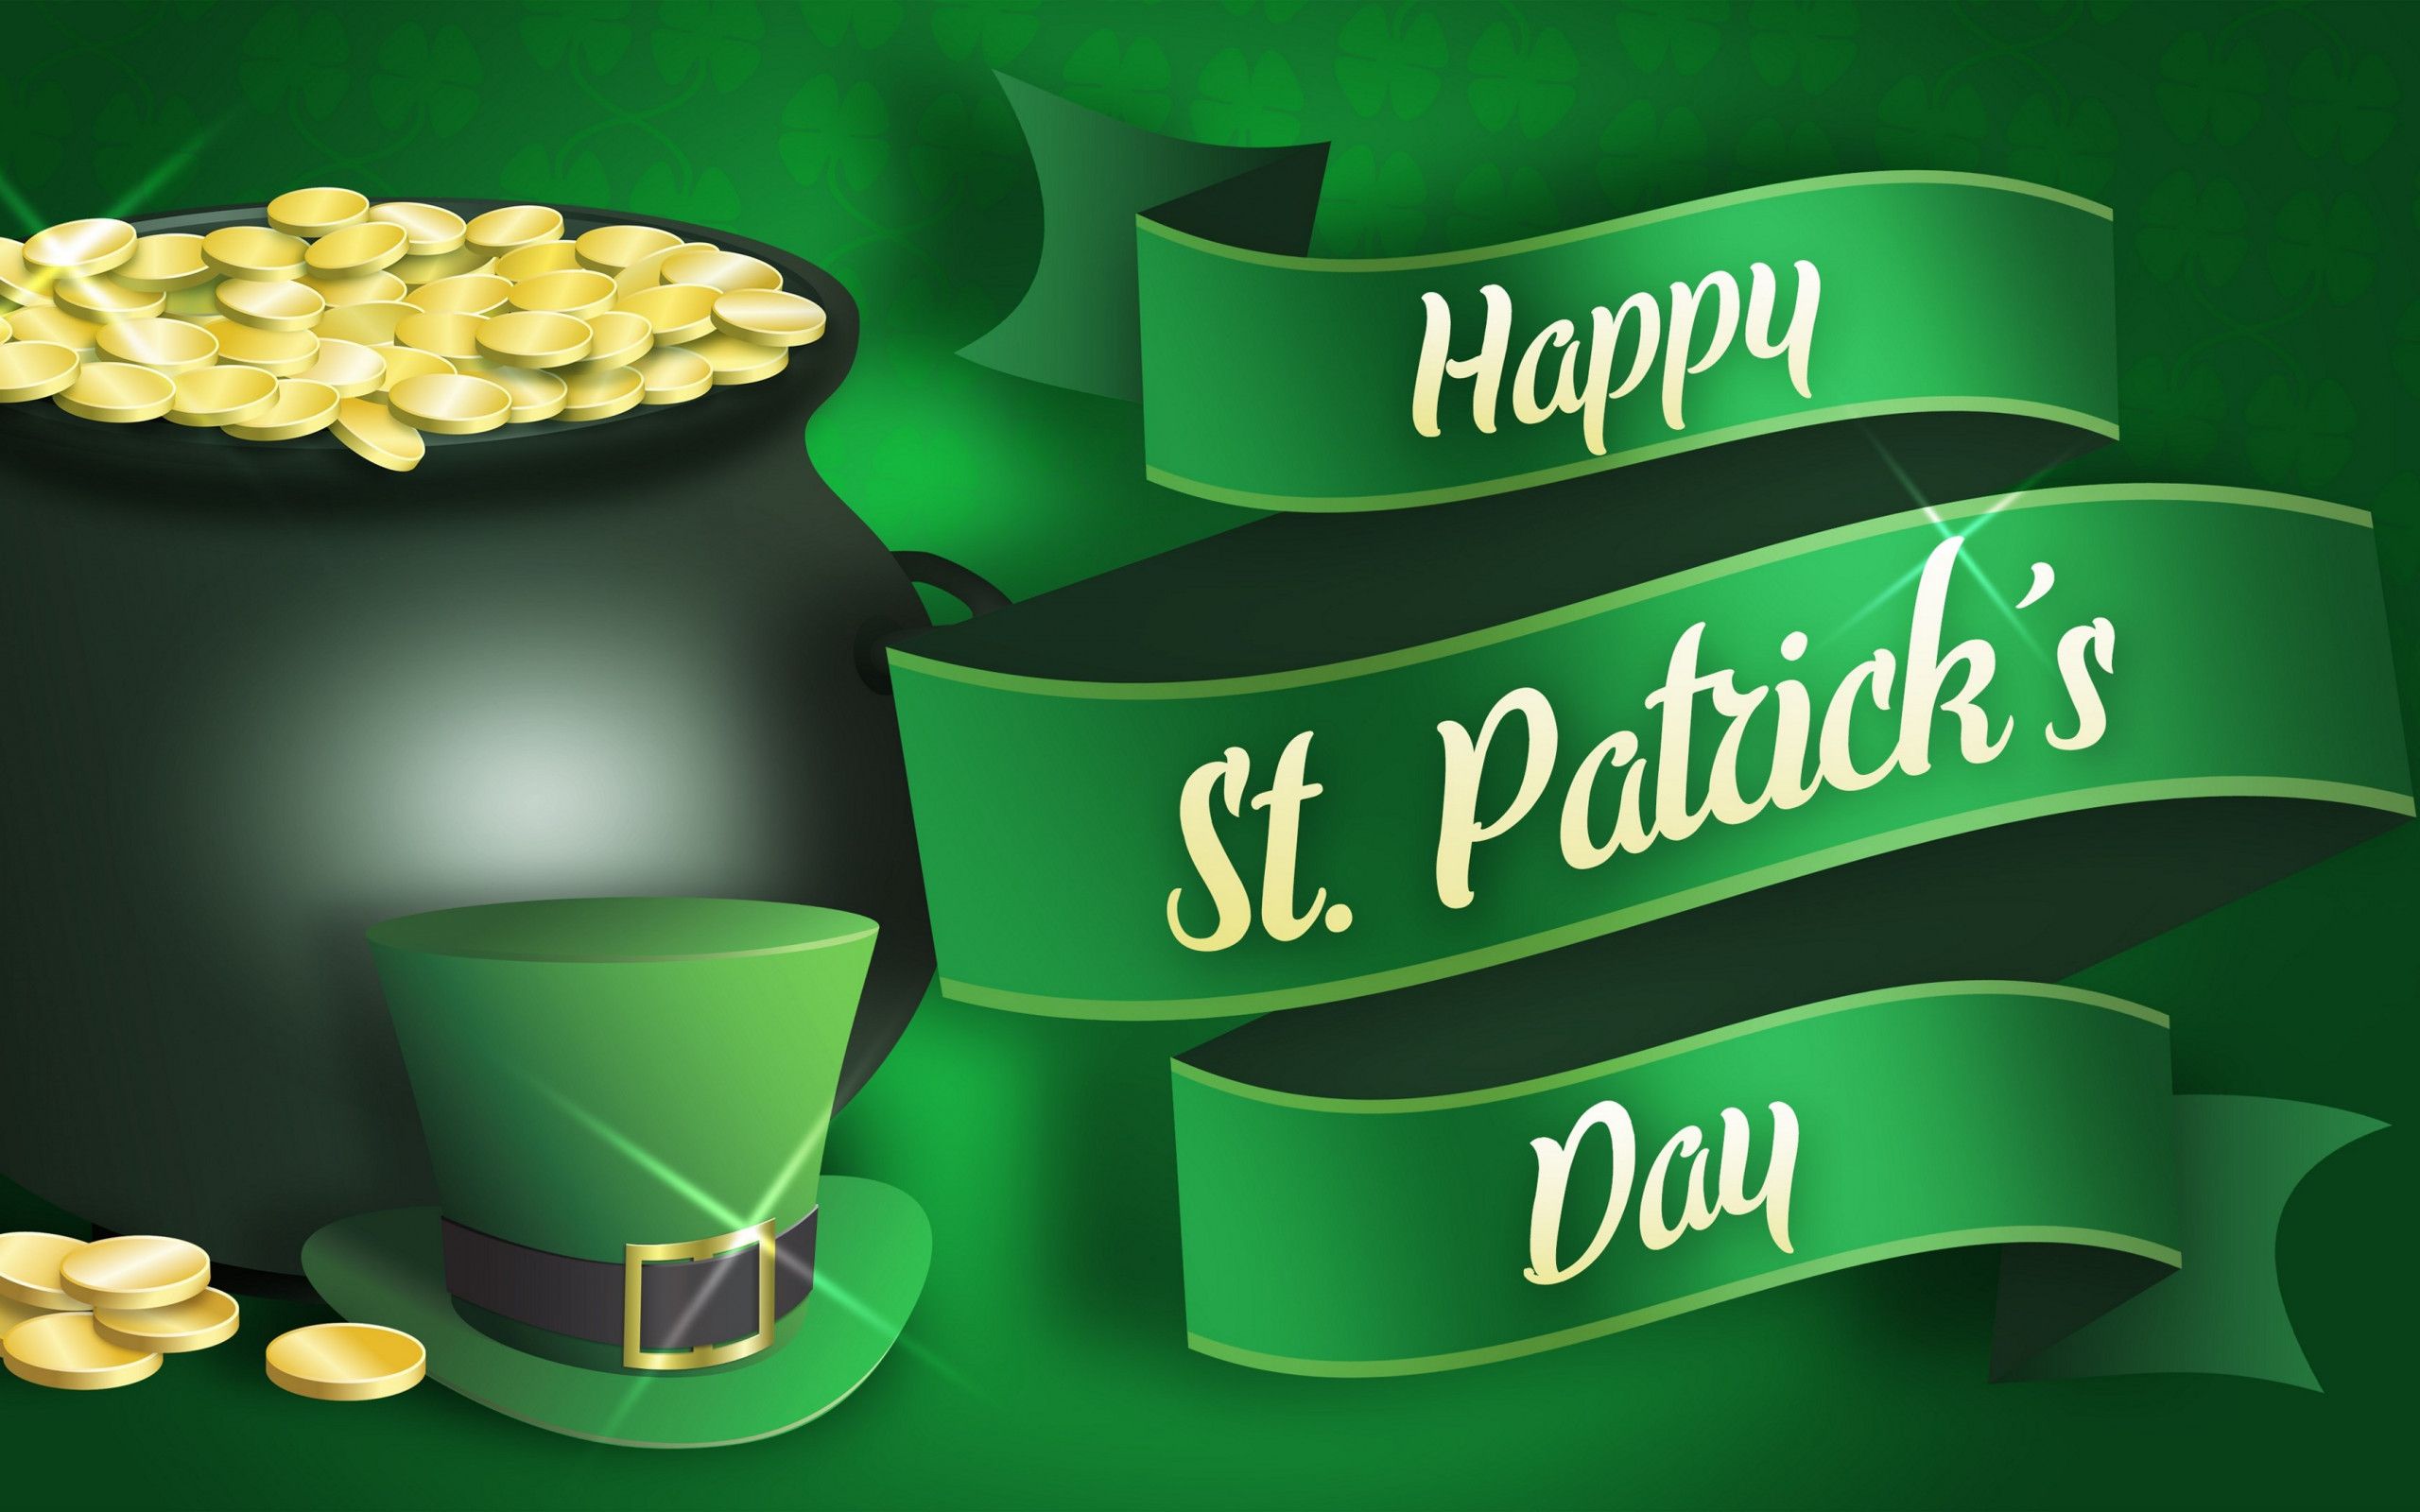 Download wallpaper: Happy Saint Patrick's Day 2560x1600